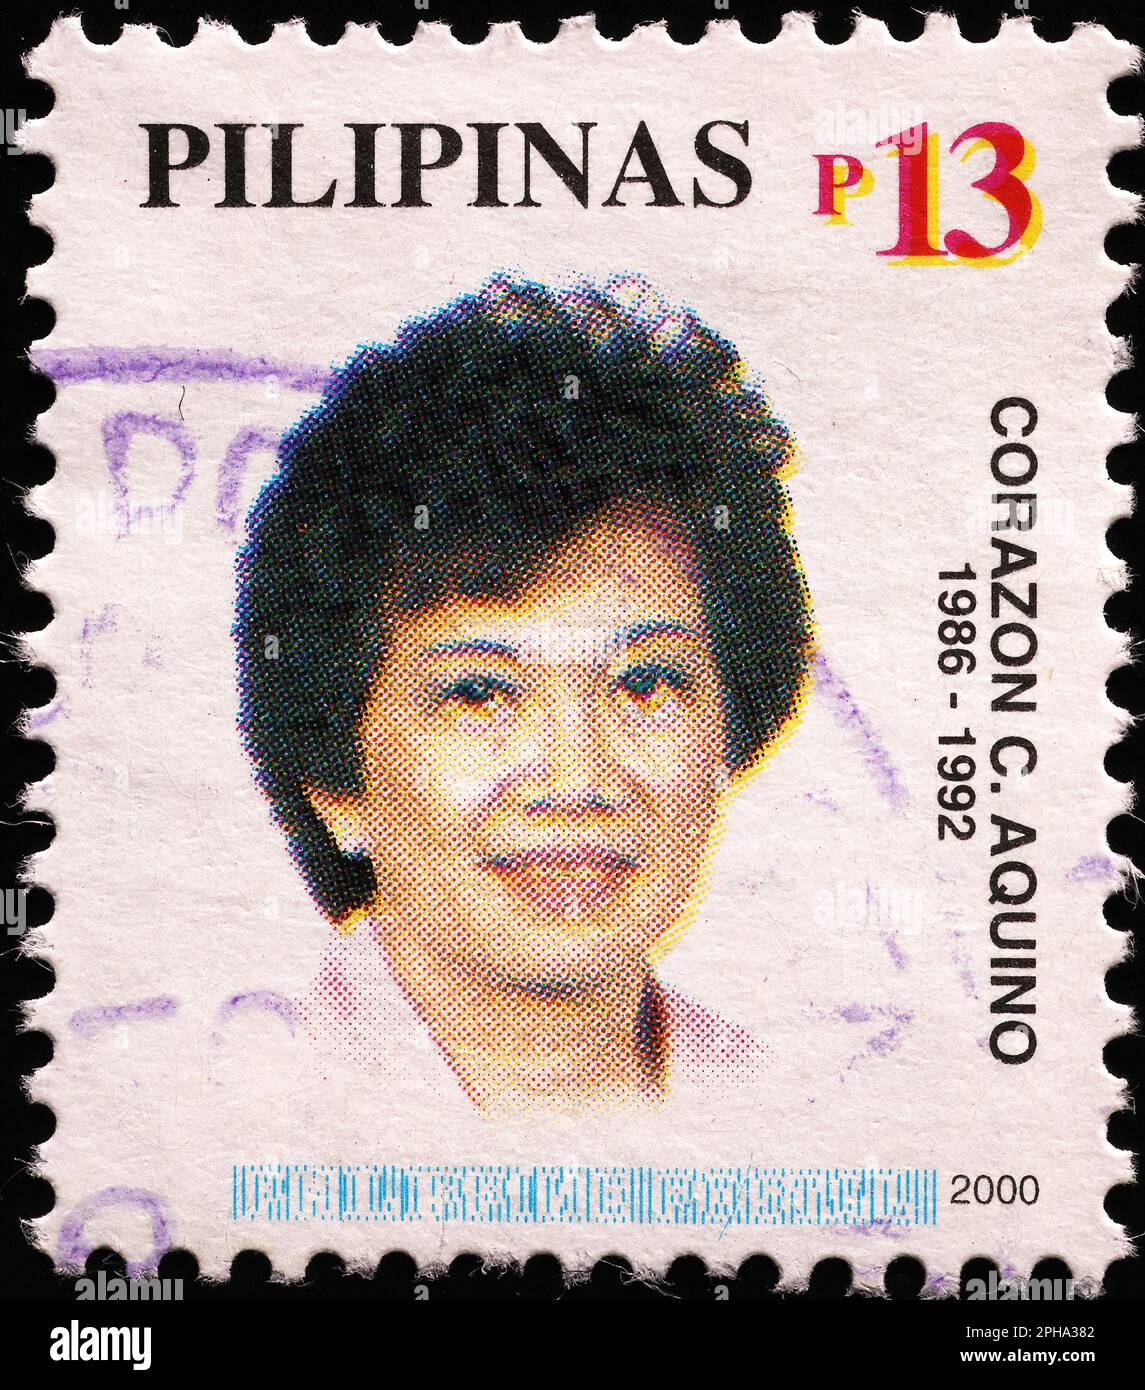 Corazon Aquino on stamp from Philippines Stock Photo